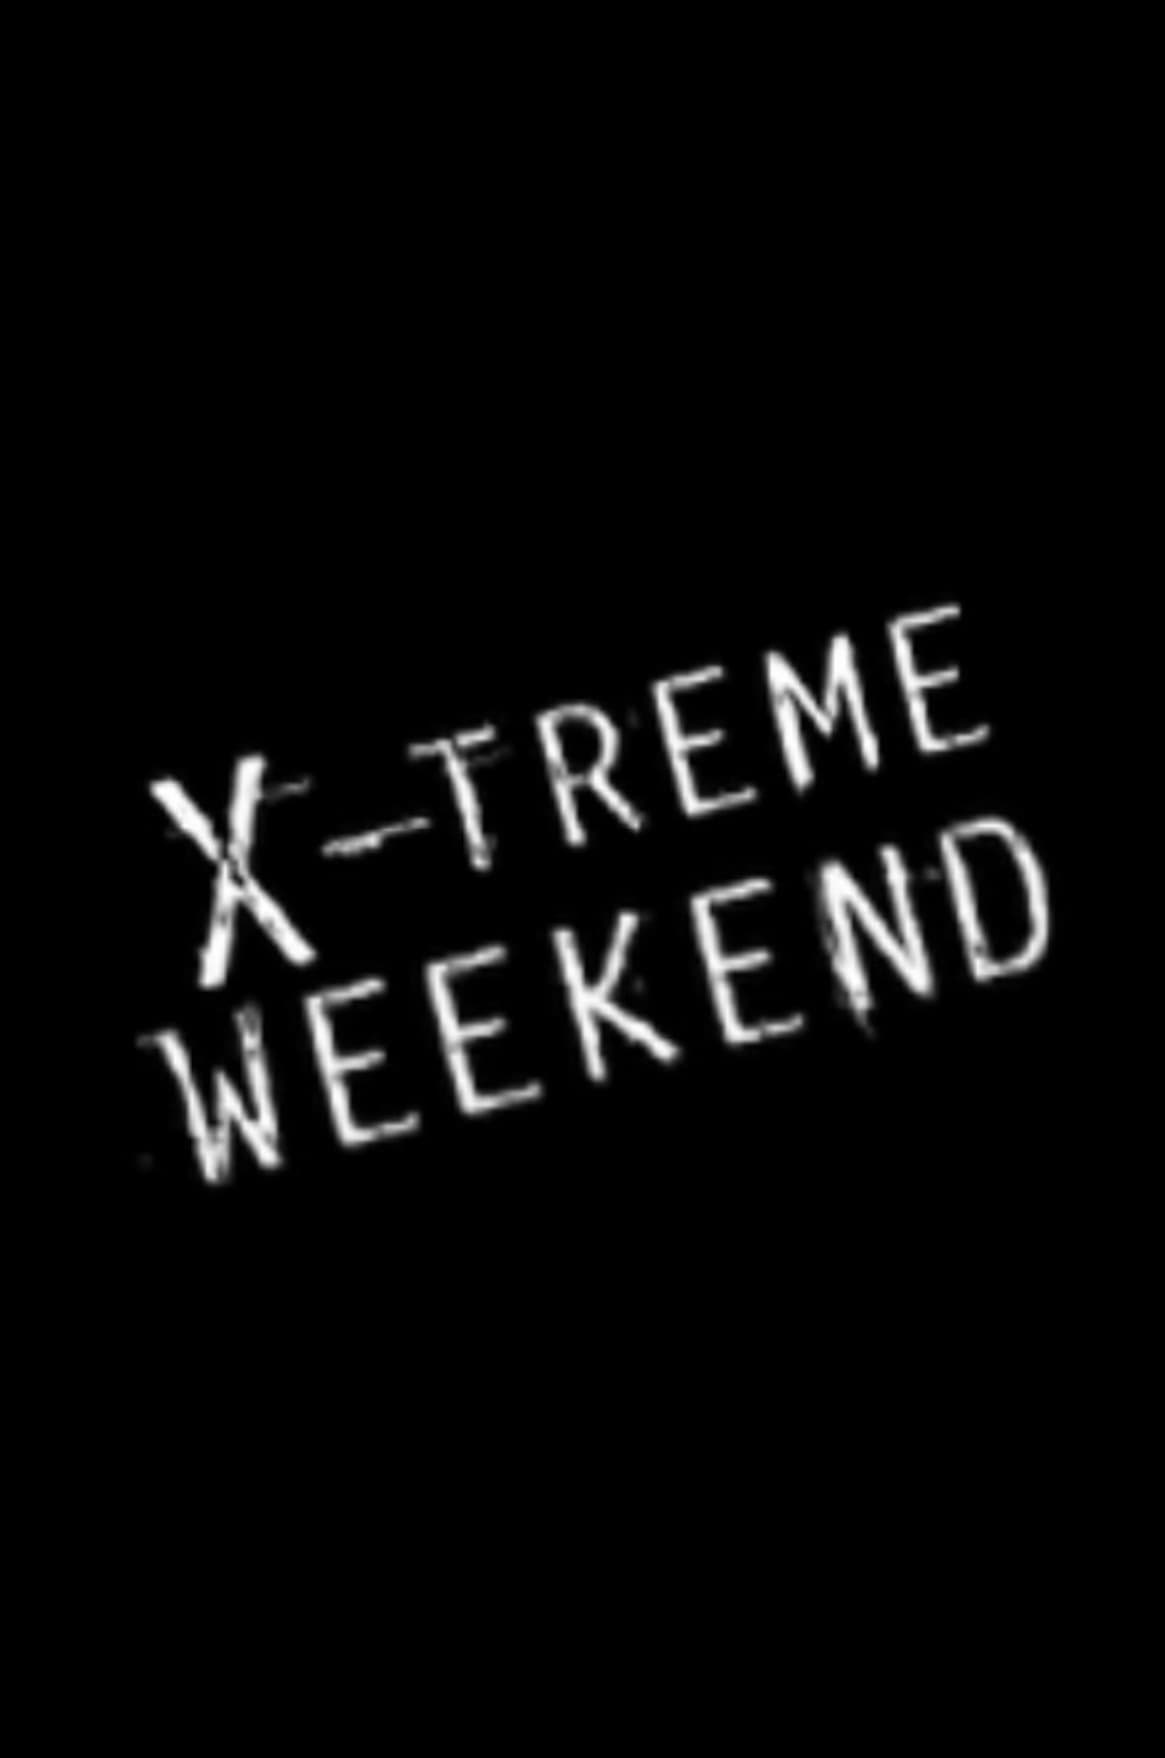 X-treme Weekend